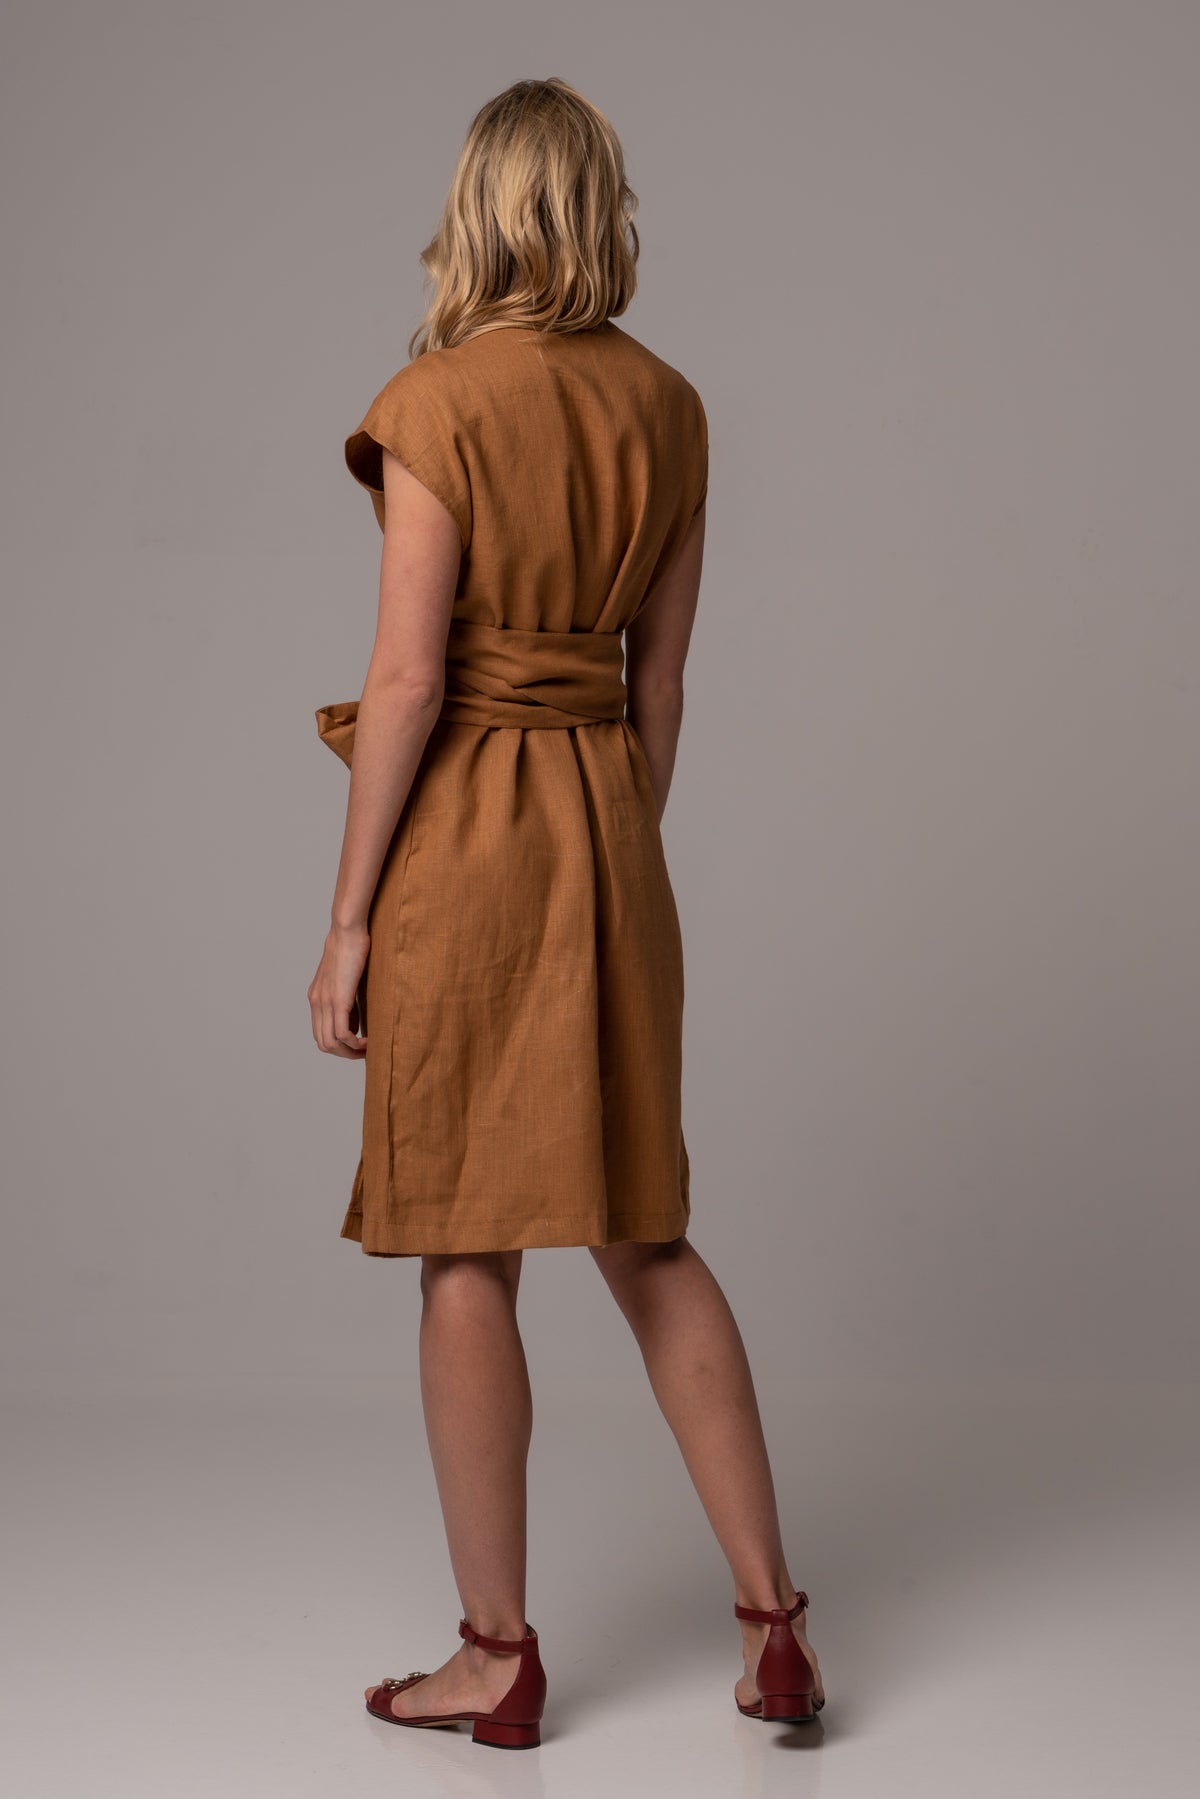 Tassel Wrap Dress in Premium European Linen